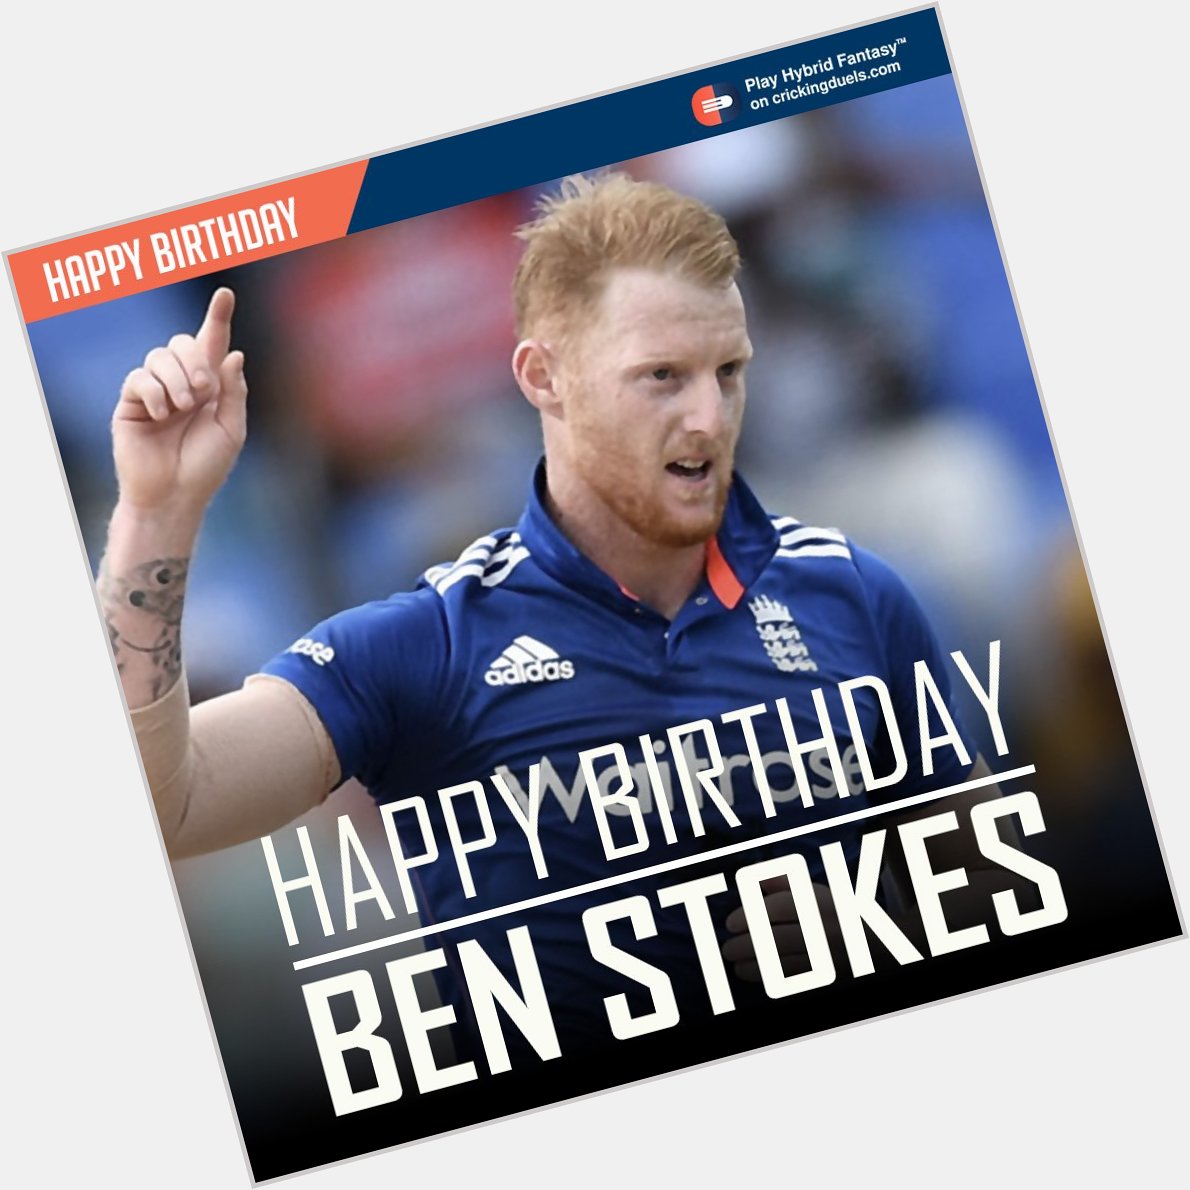 Happy Birthday Ben Stokes. The England cricketer turns 26 today. 